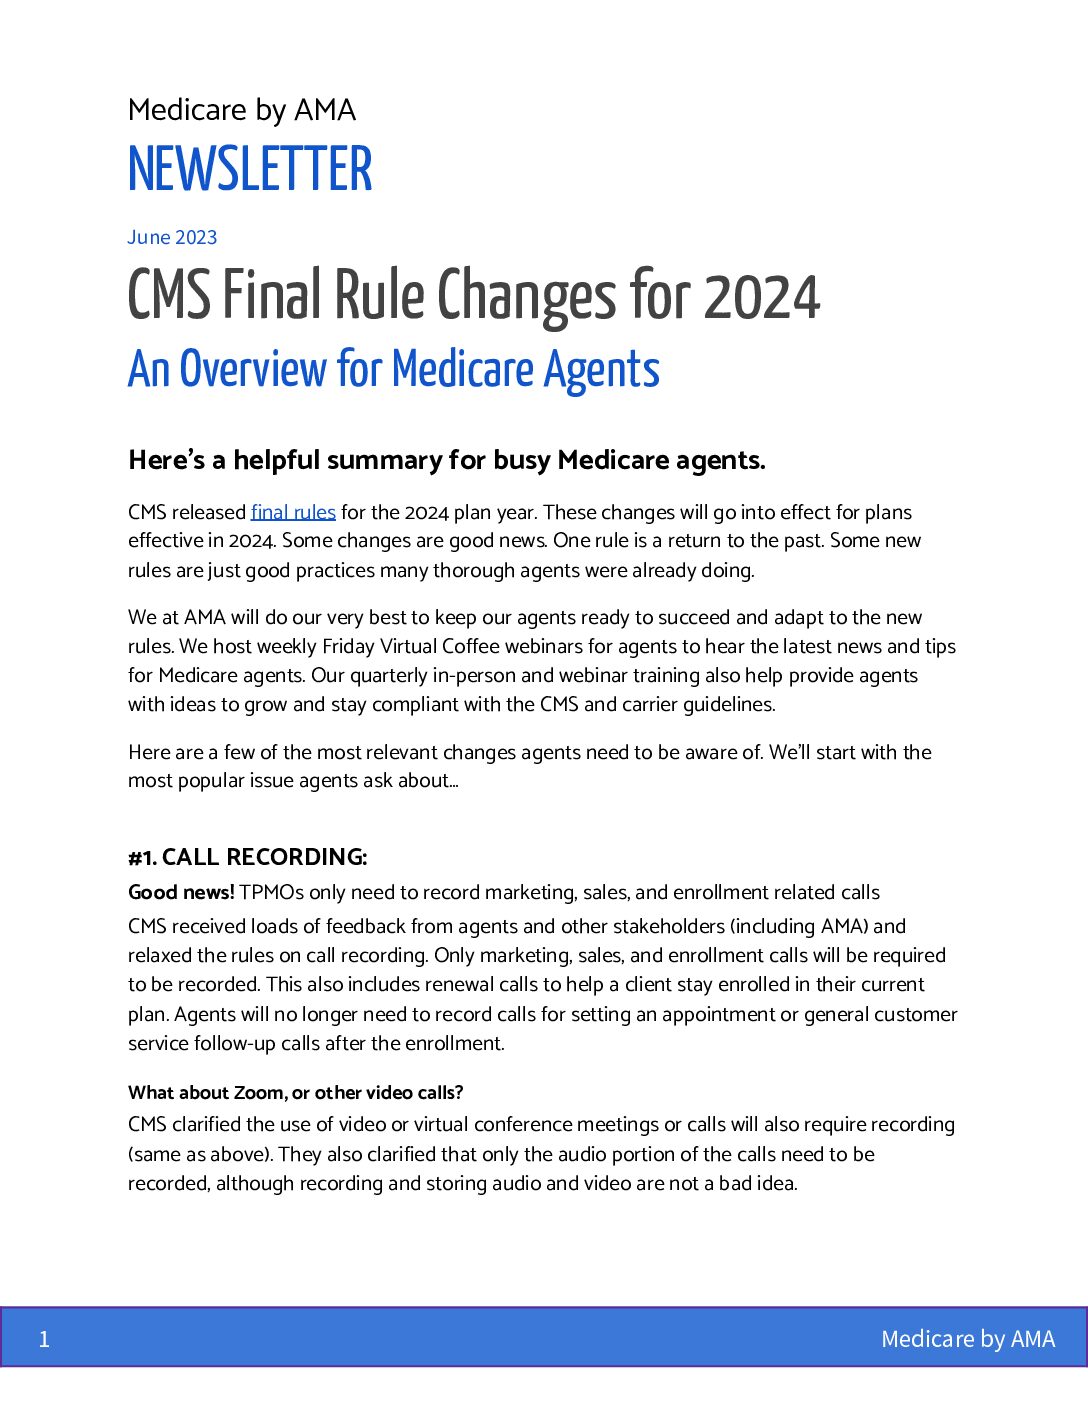 Medicare by AMA Newsletter June 2023